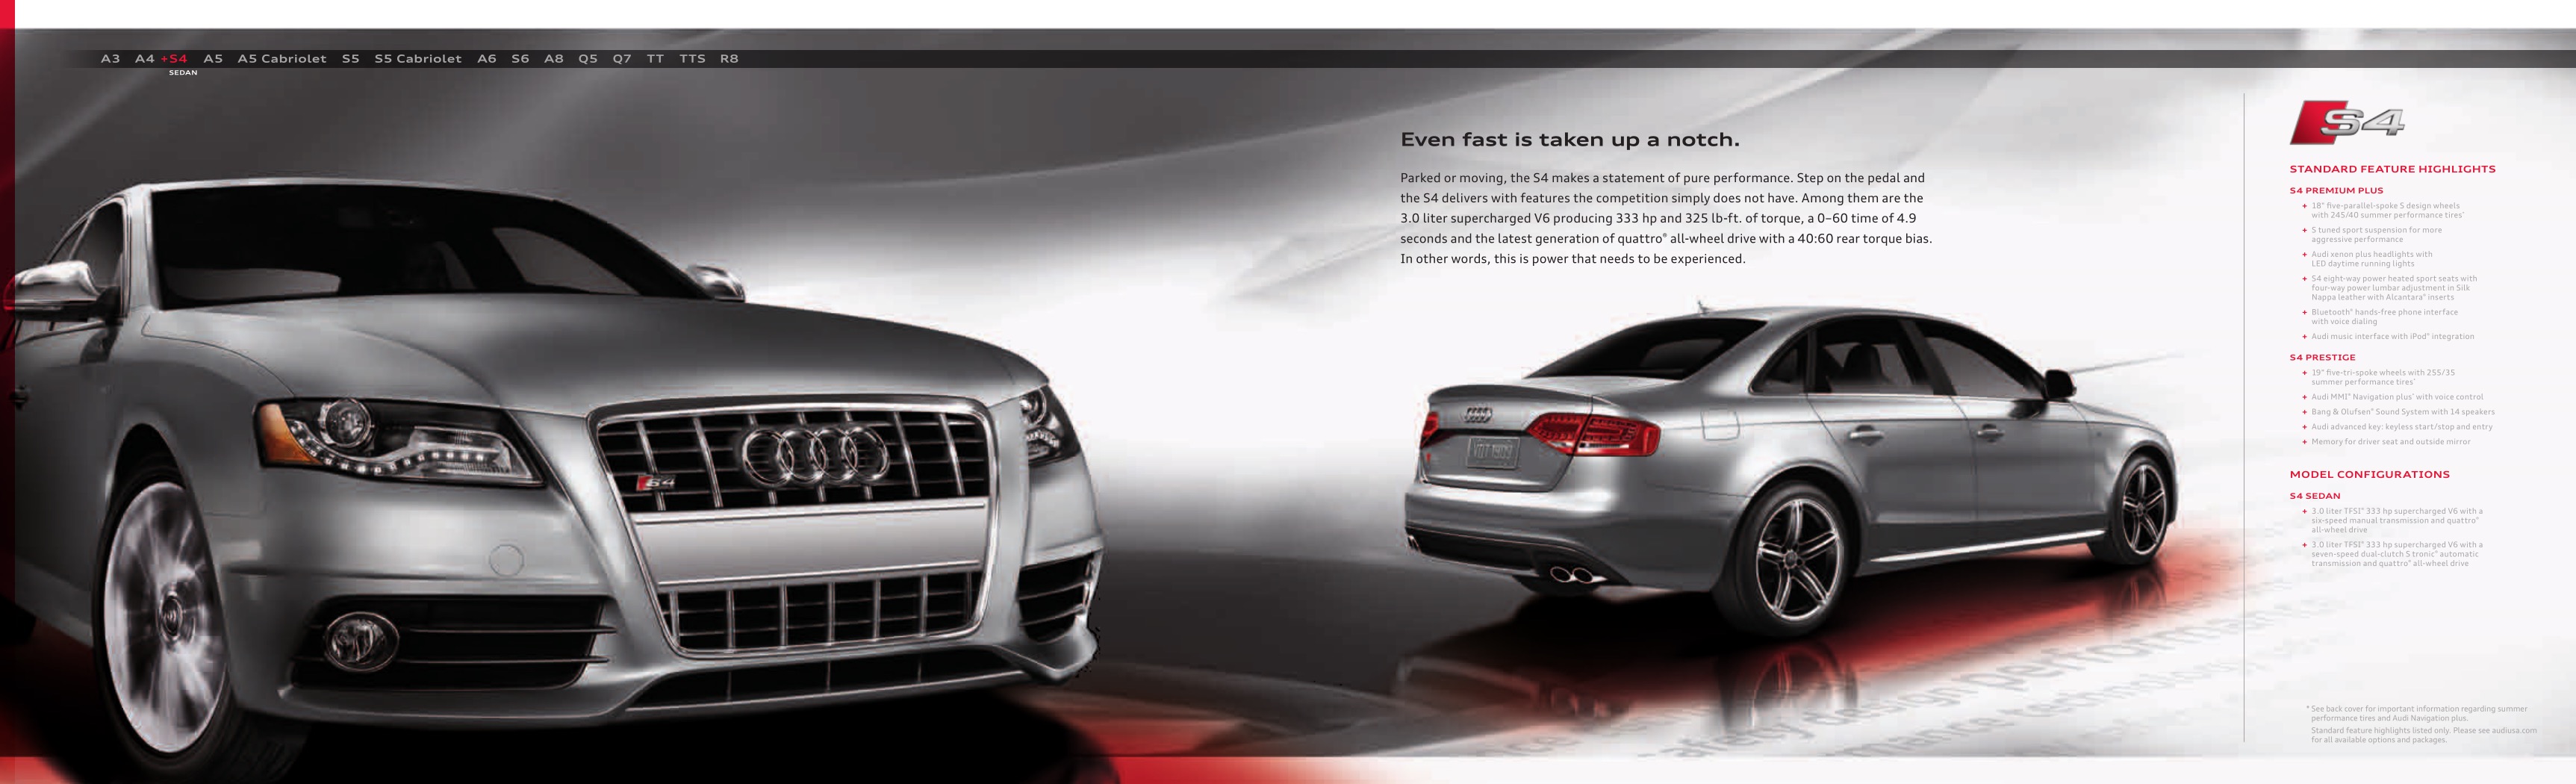 2010 Audi Brochure Page 2